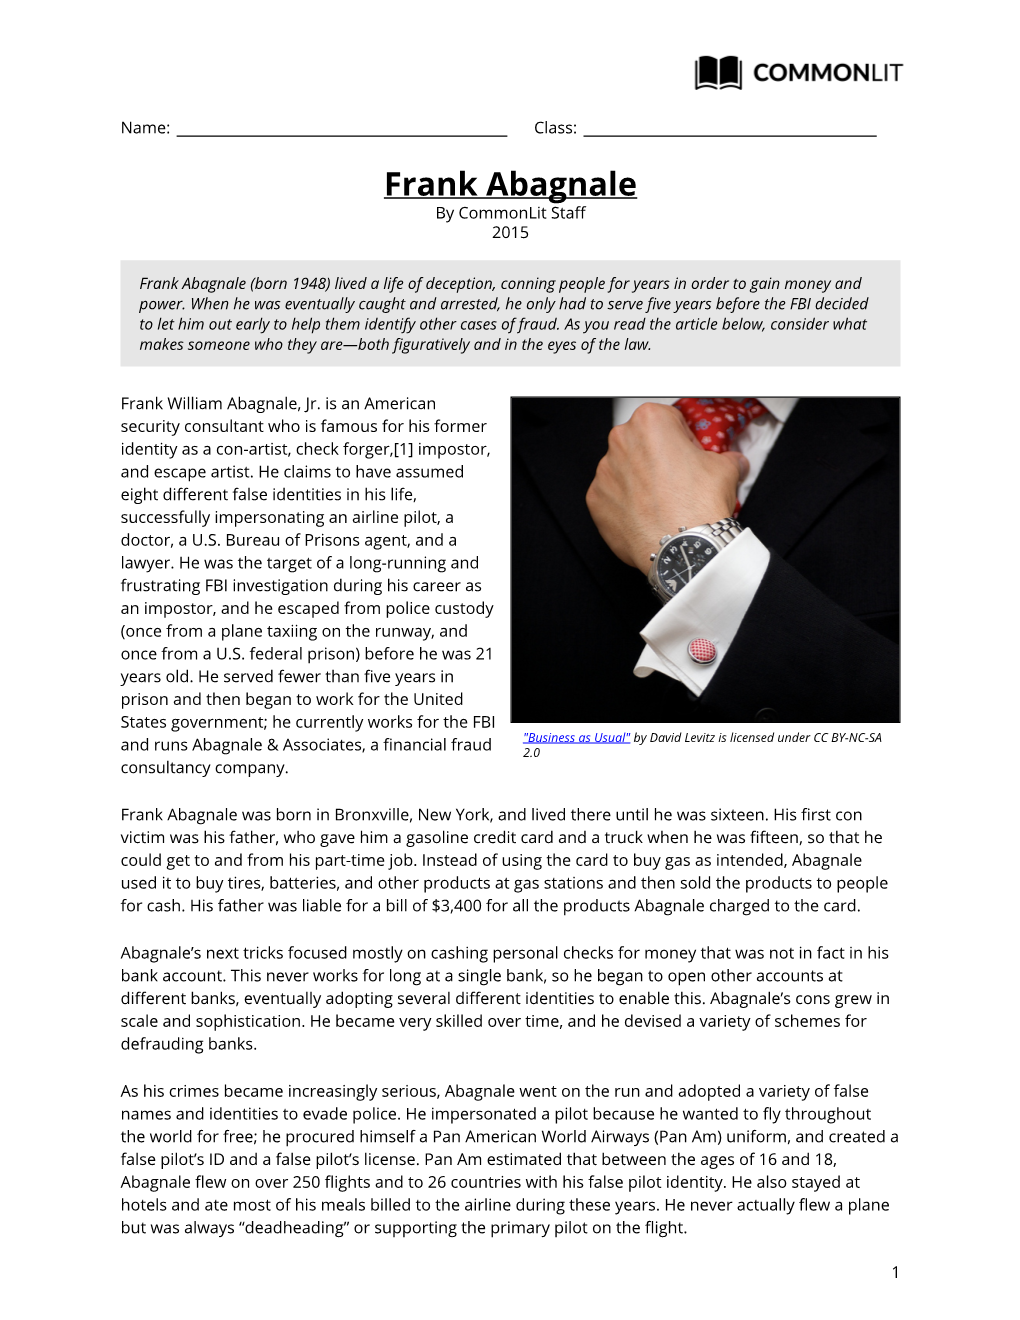 Commonlit | Frank Abagnale